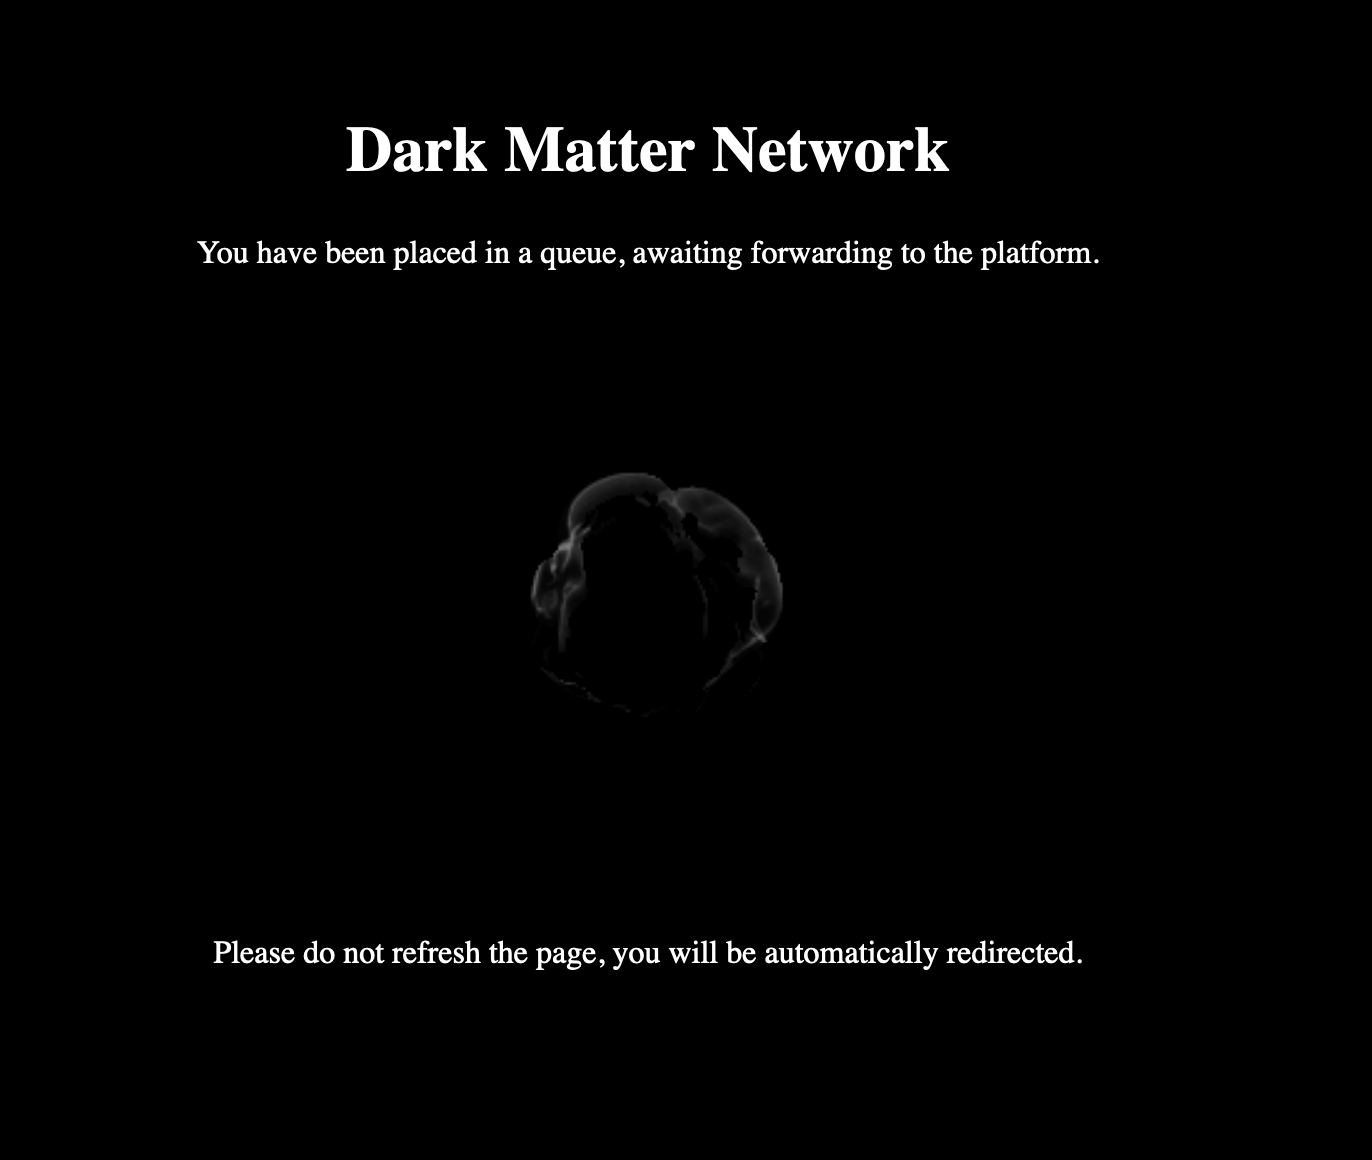 Contact DarkMatter Market